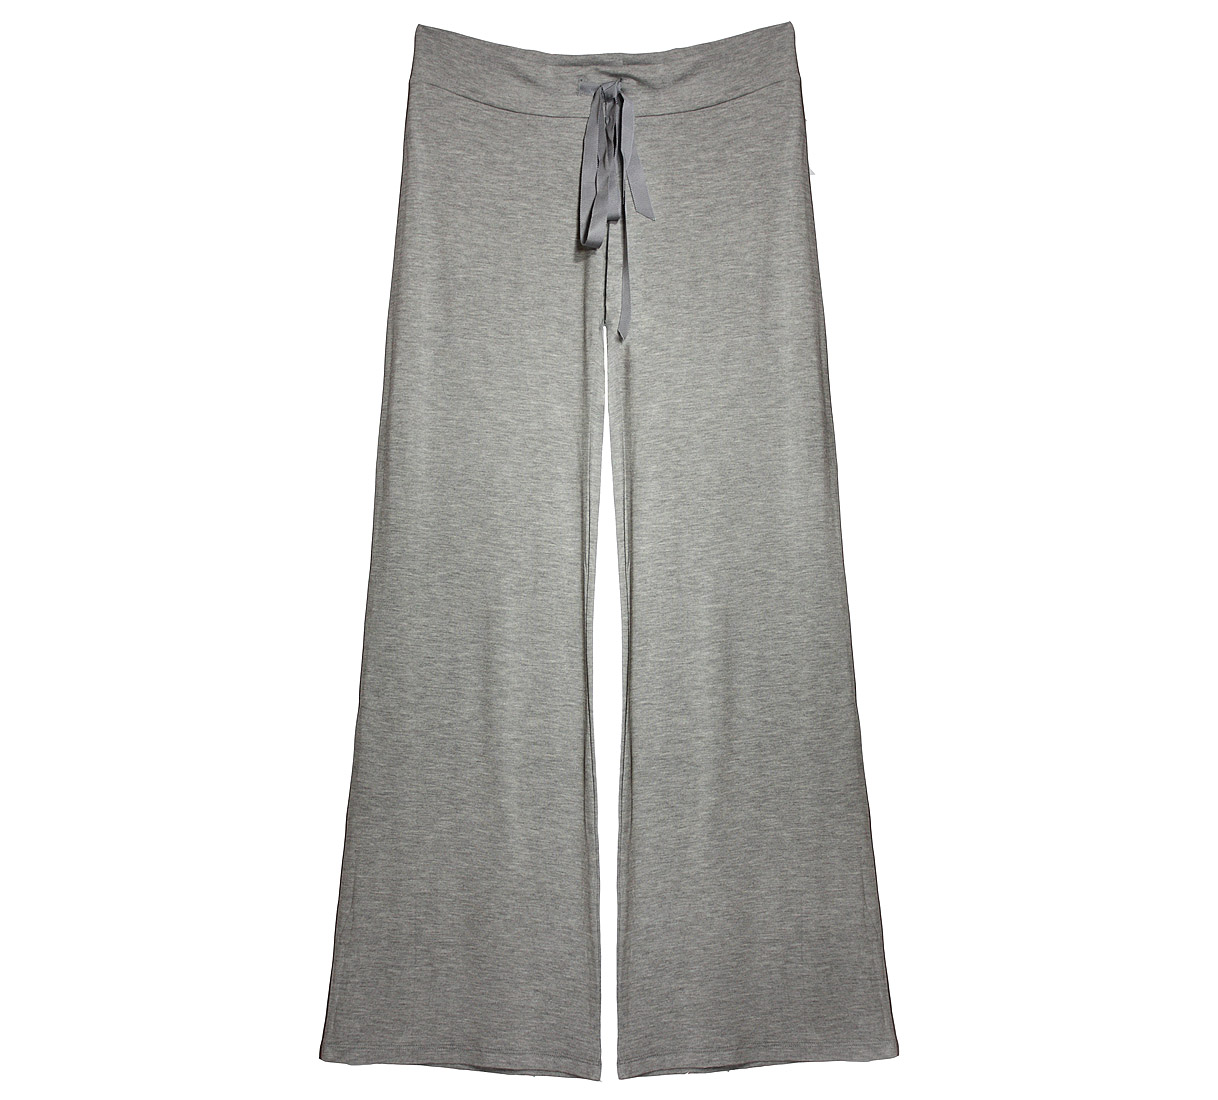 Matchplay Lounge Pant | Luxurious Jersey Knit Lounge Wear | Between the Sheets Designer Sleepwear